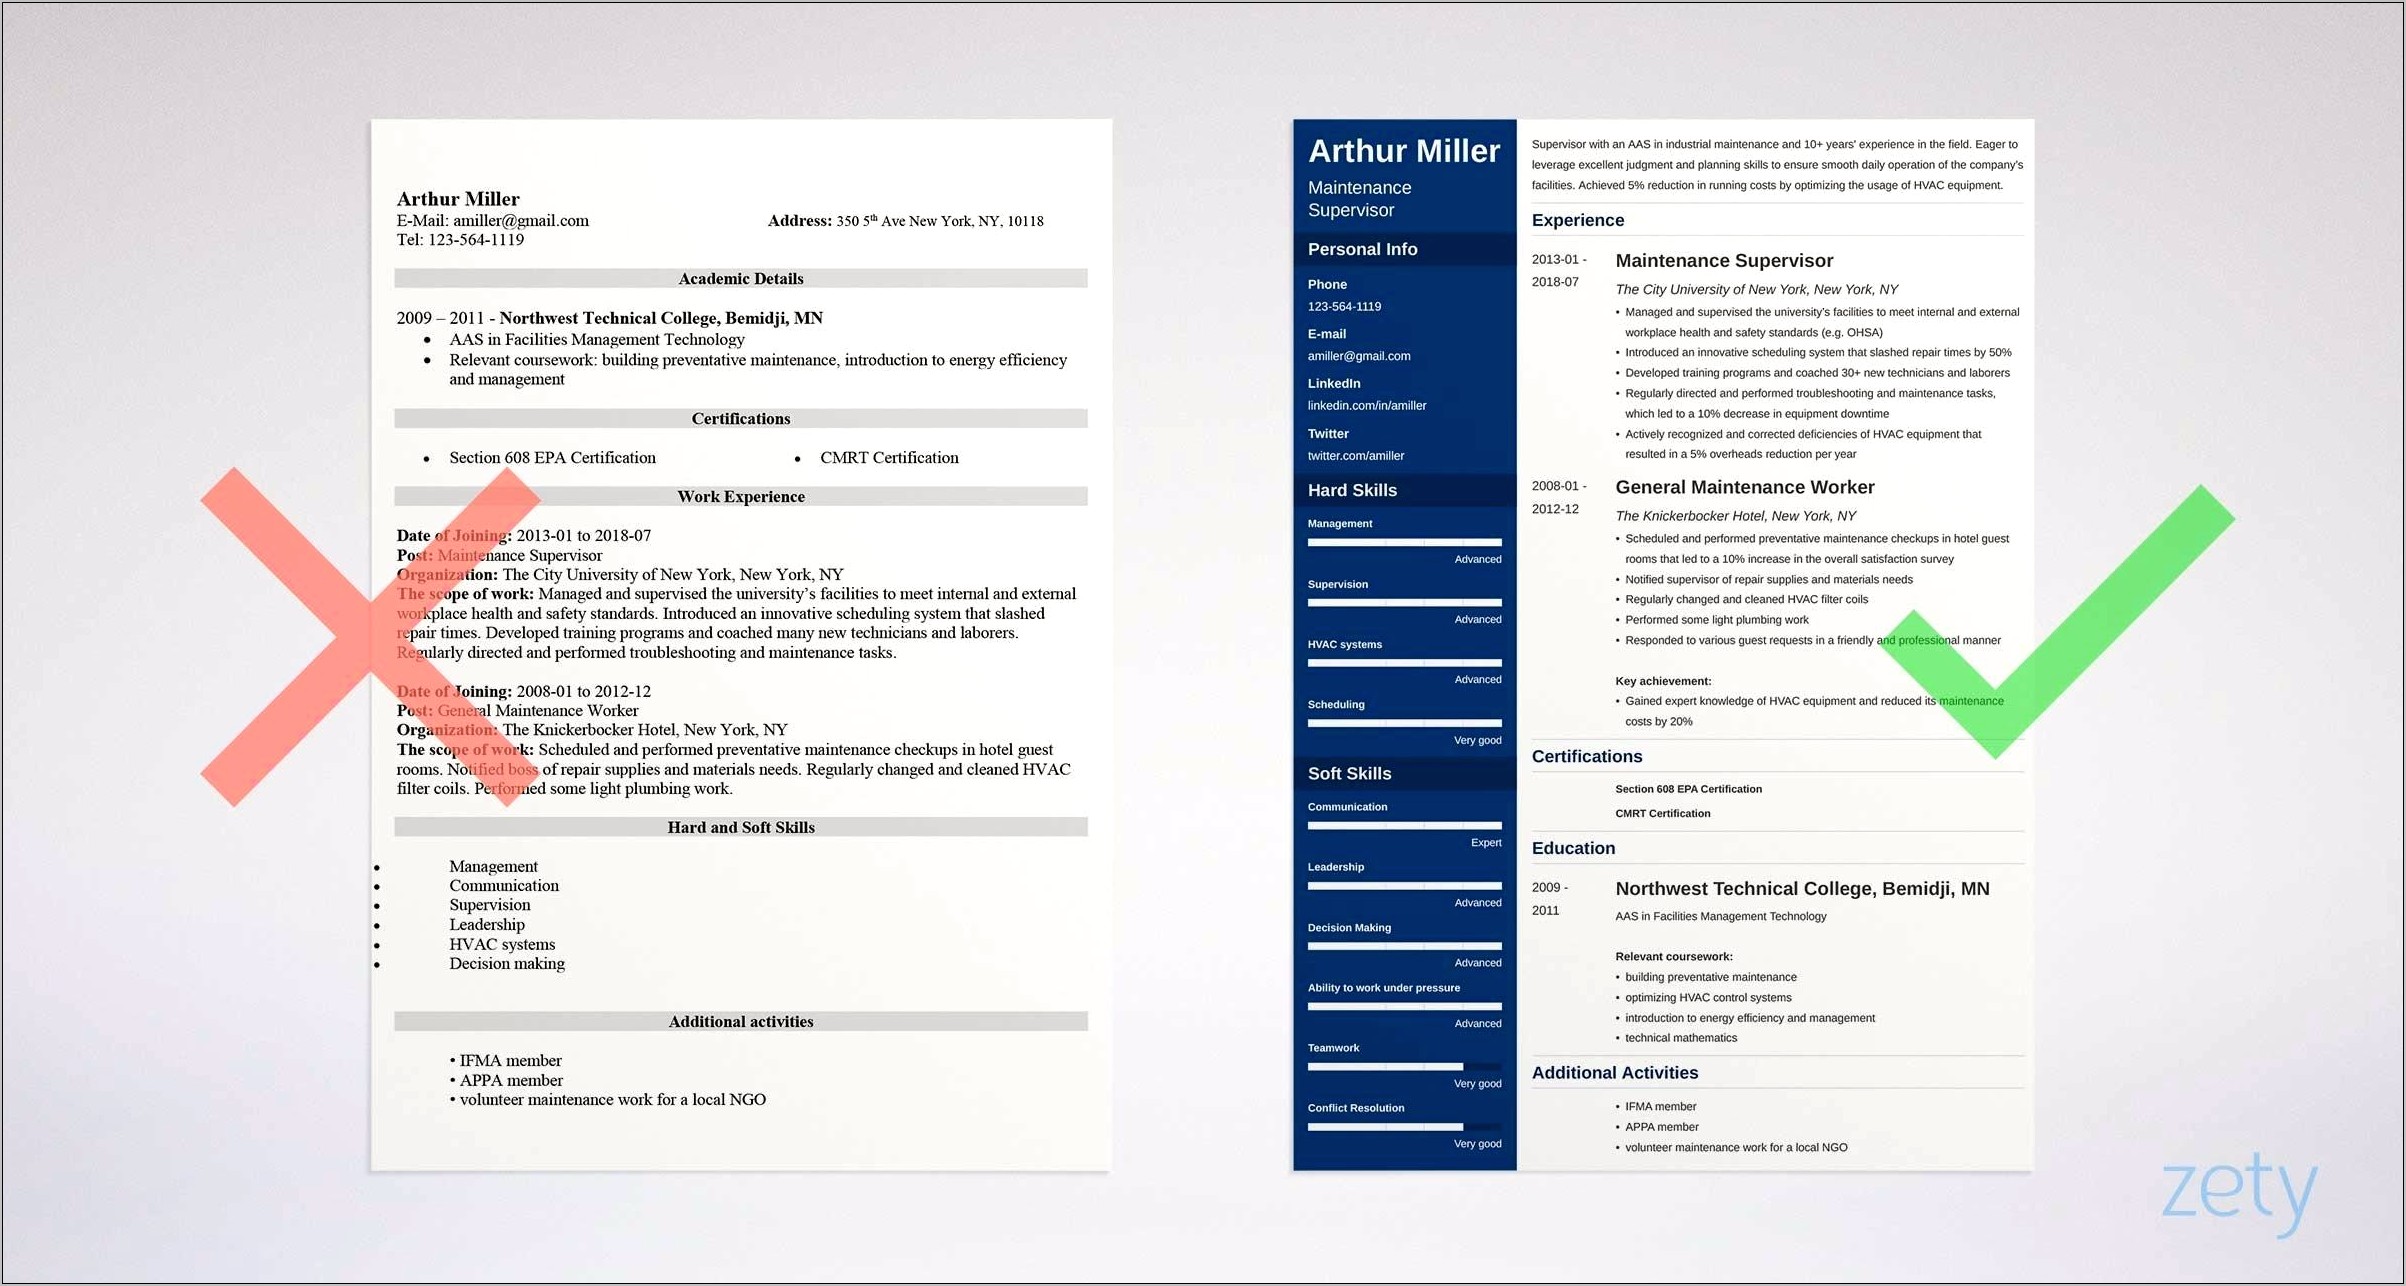 Sample Resume For Income Maintenance Caseworker